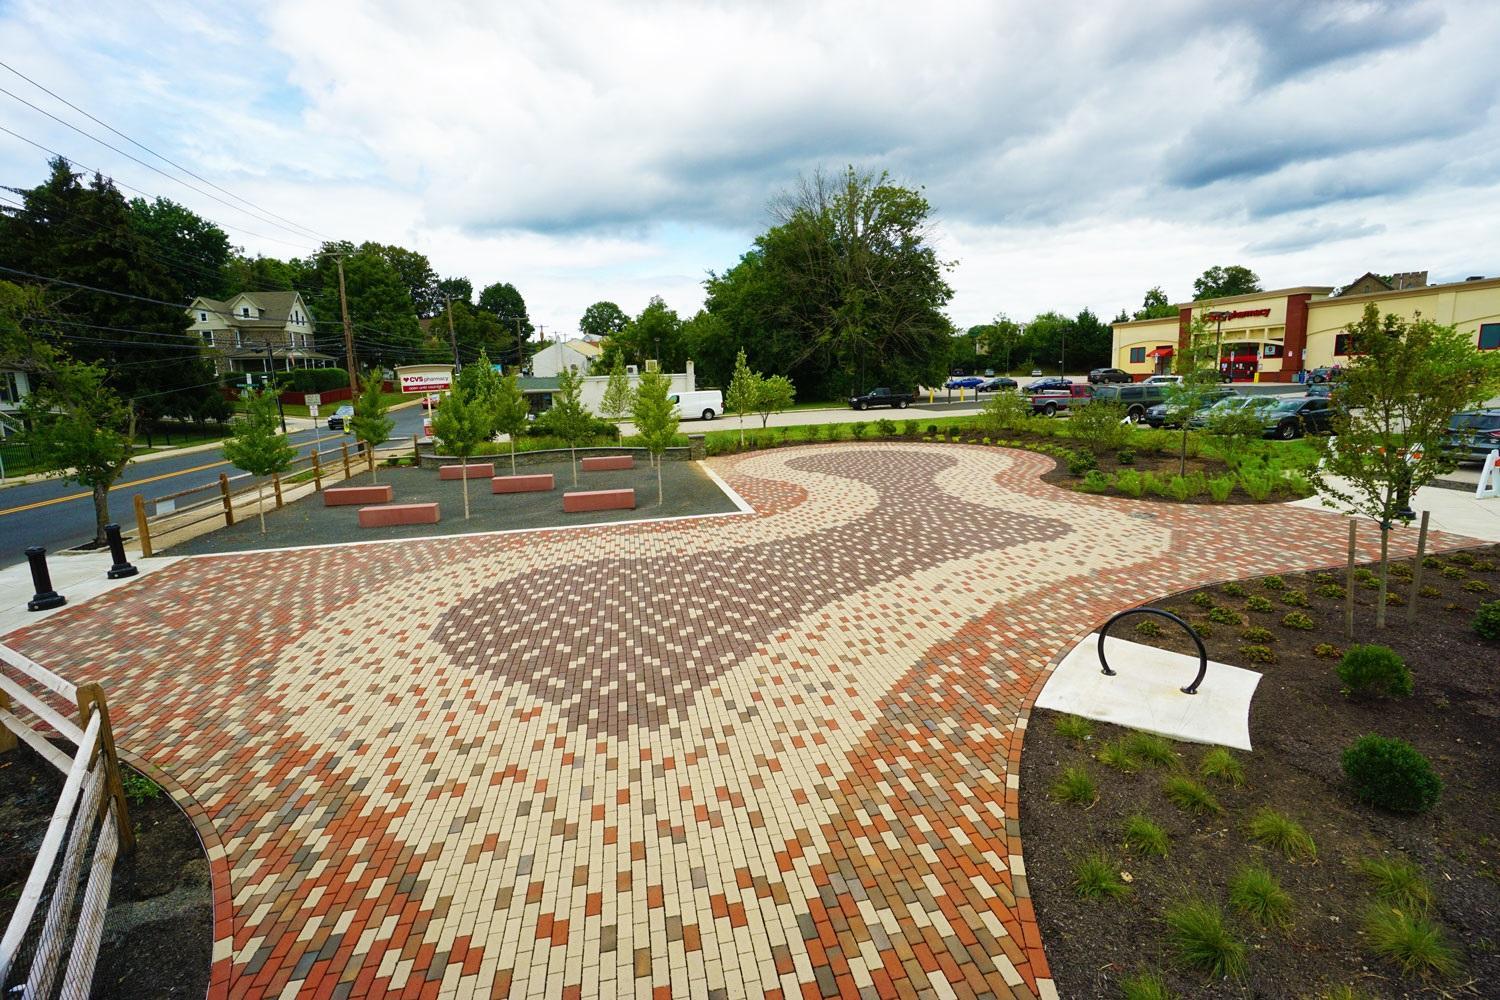 The patterned brick walkway at Ambler Square Park